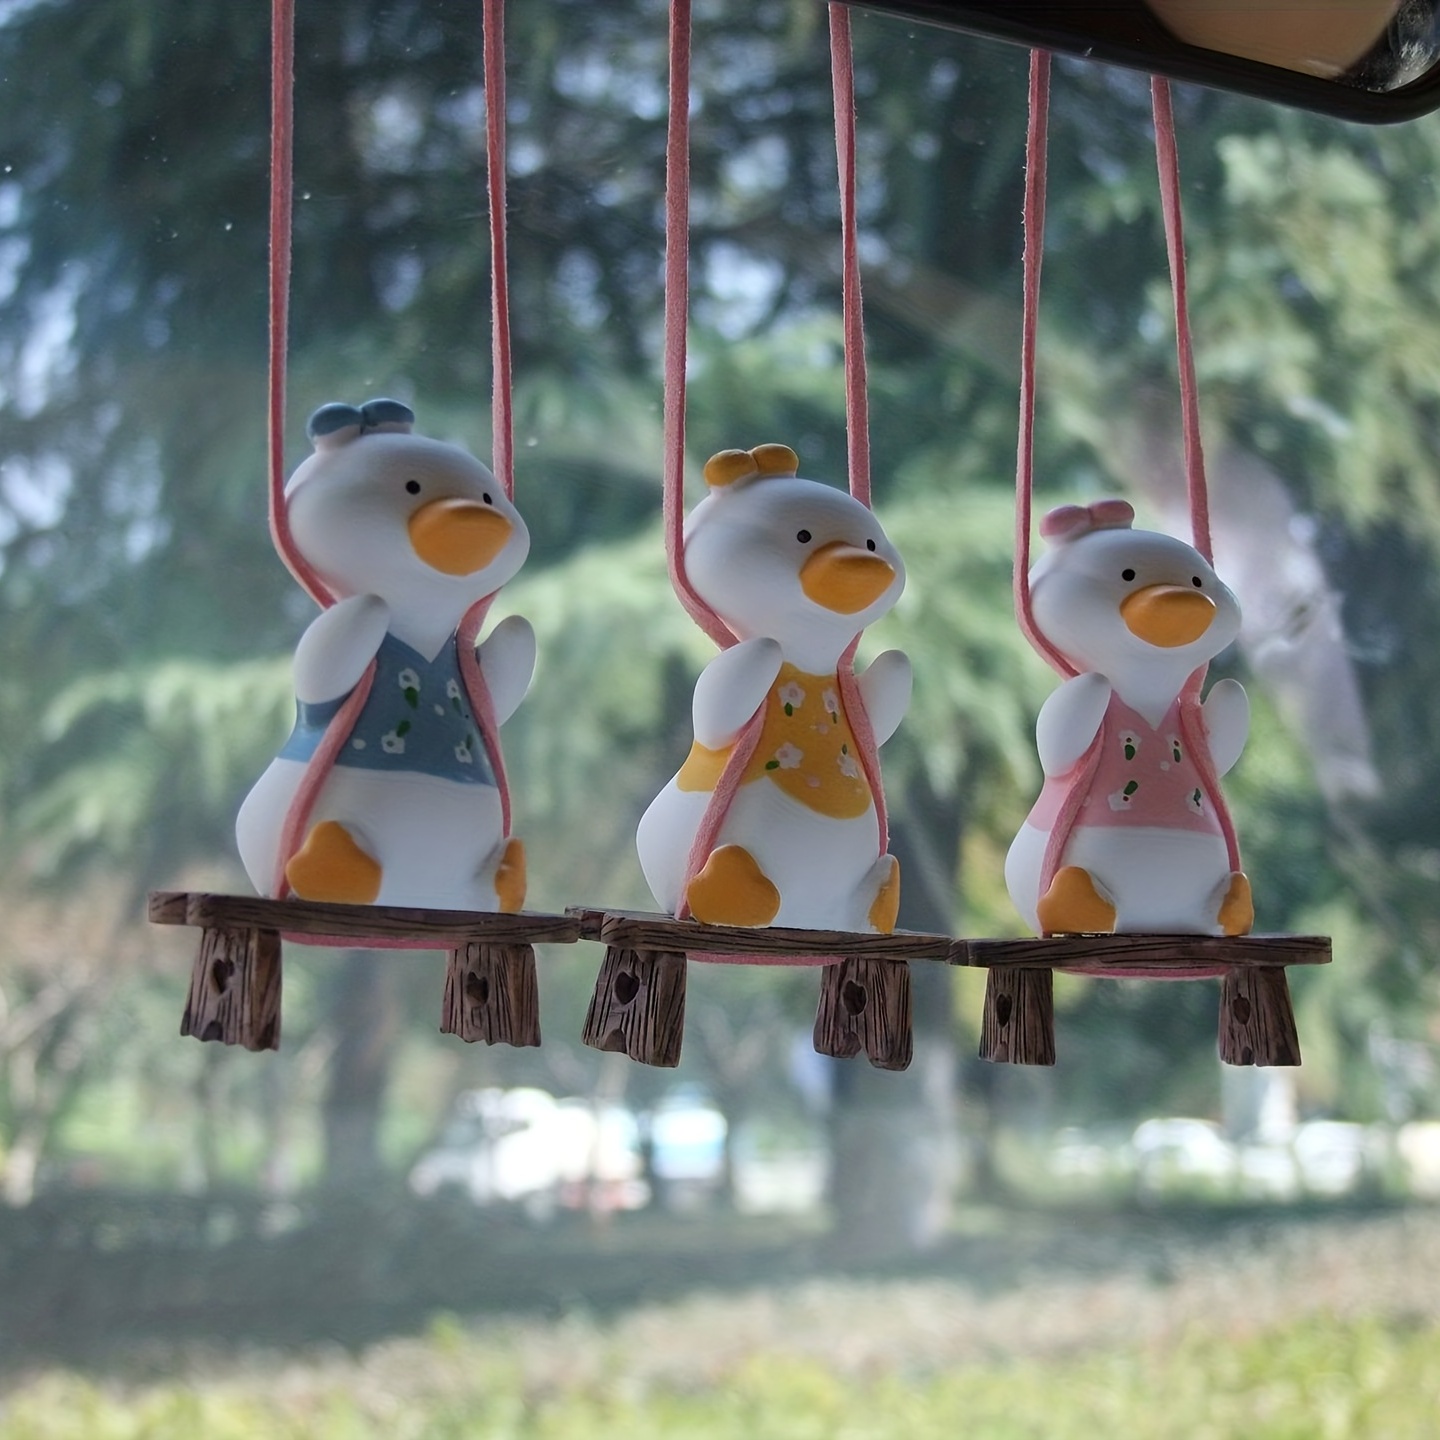 Adorable Swinging Duck Car Pendant A Fun Unique Car Rear - Temu